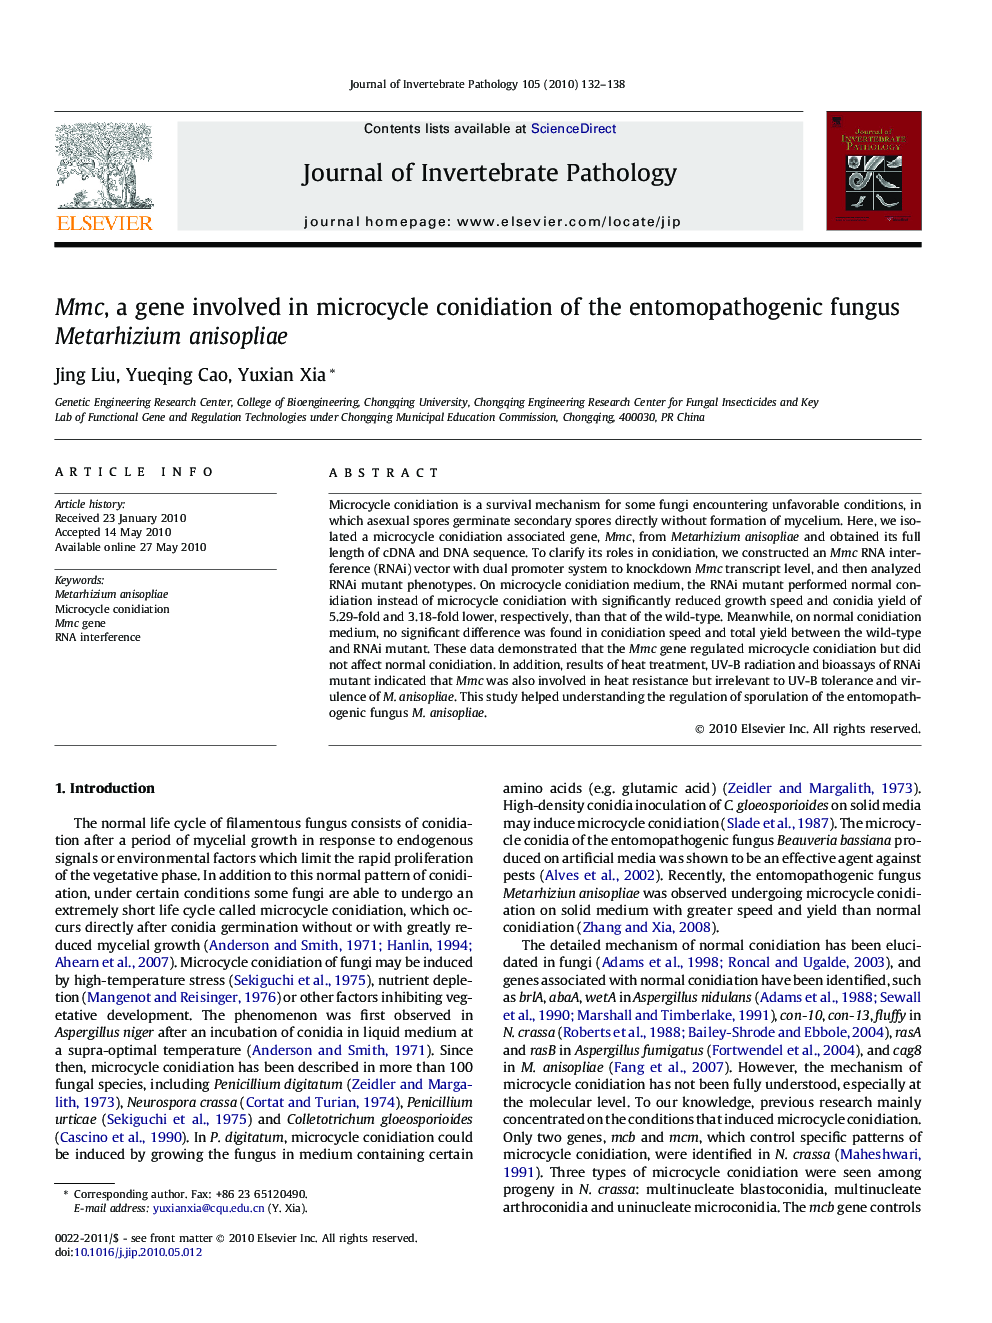 Mmc, a gene involved in microcycle conidiation of the entomopathogenic fungus Metarhizium anisopliae